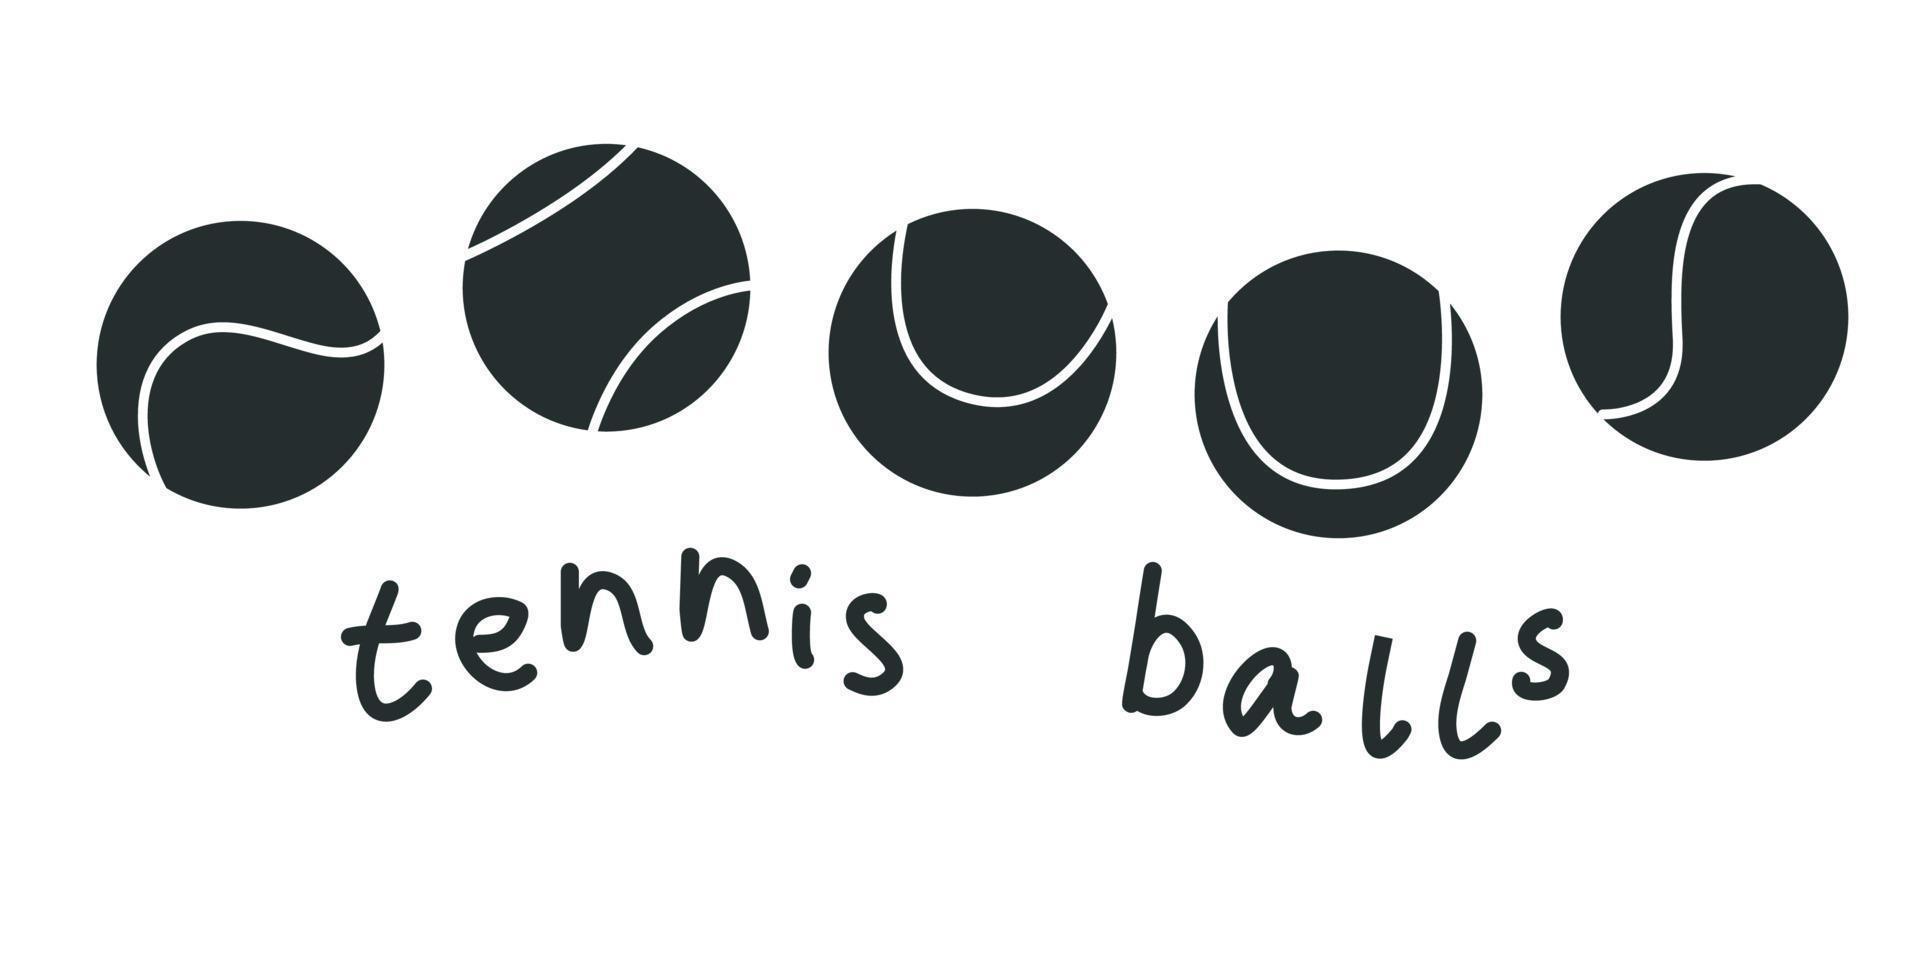 ilustración de silueta de vector plano. diferentes pelotas de tenis dibujadas a mano